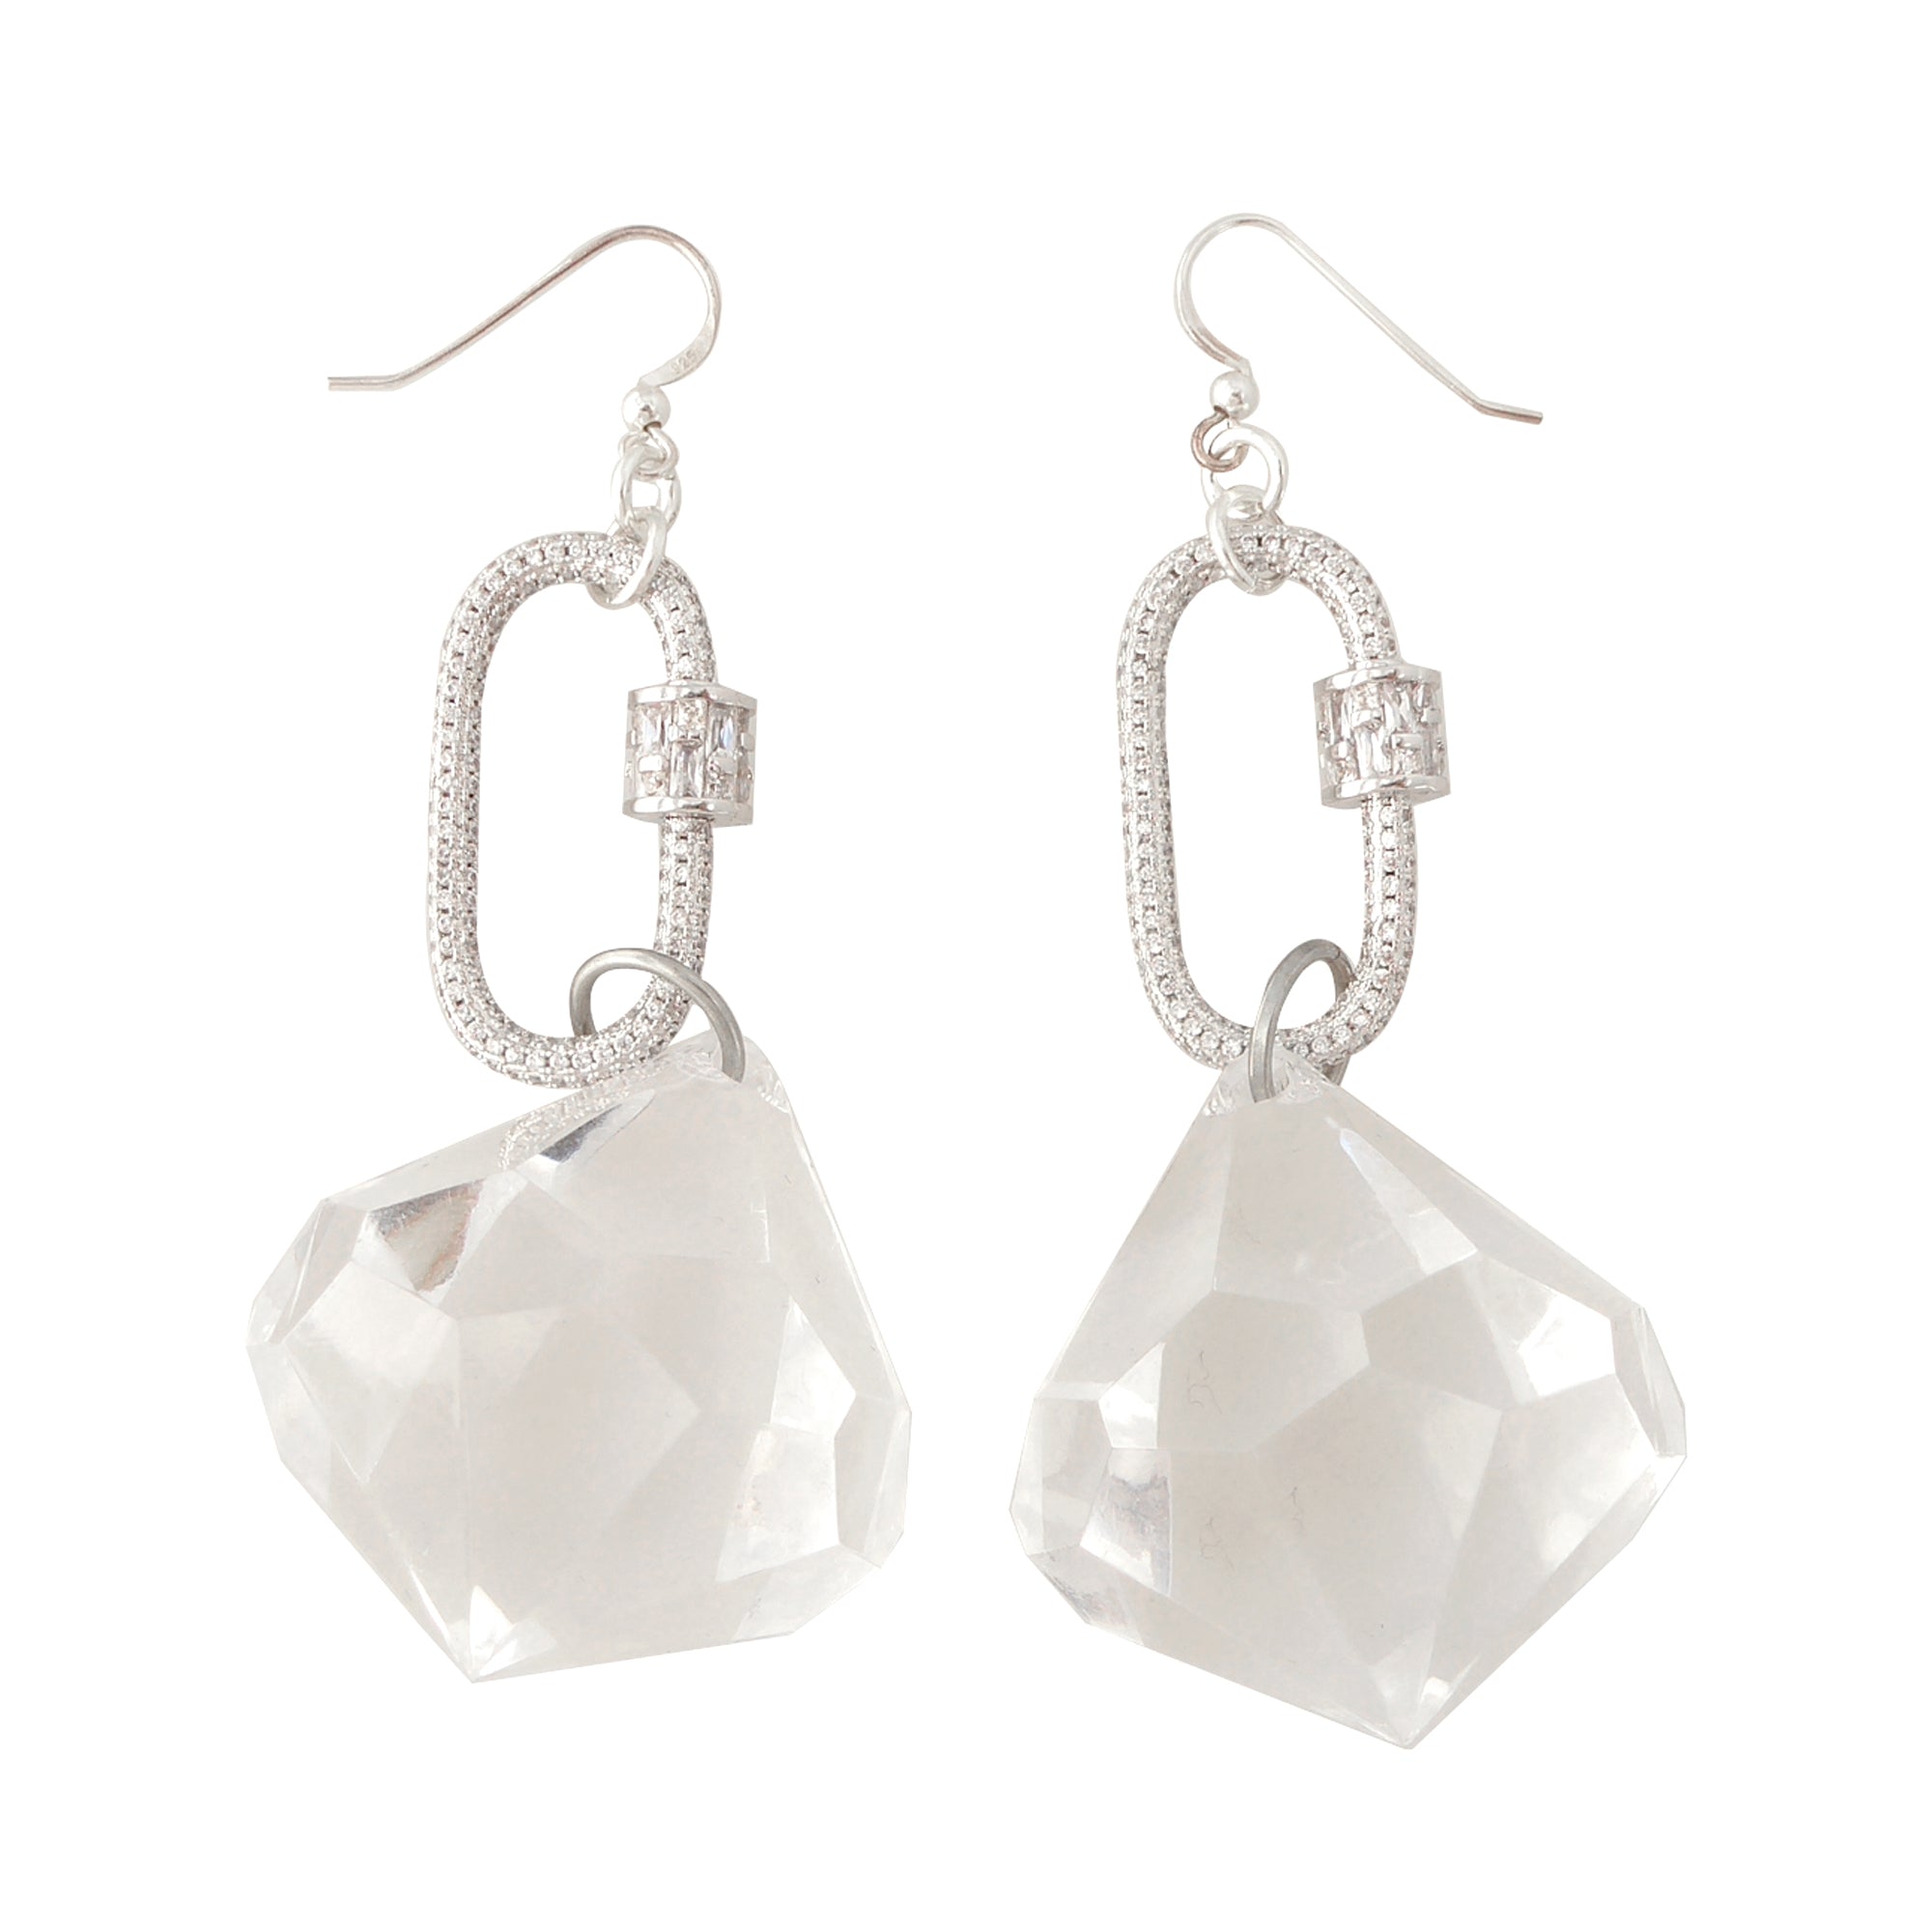 Silver rhinestone carabiner clear gem earrings by Jenny Dayco 1